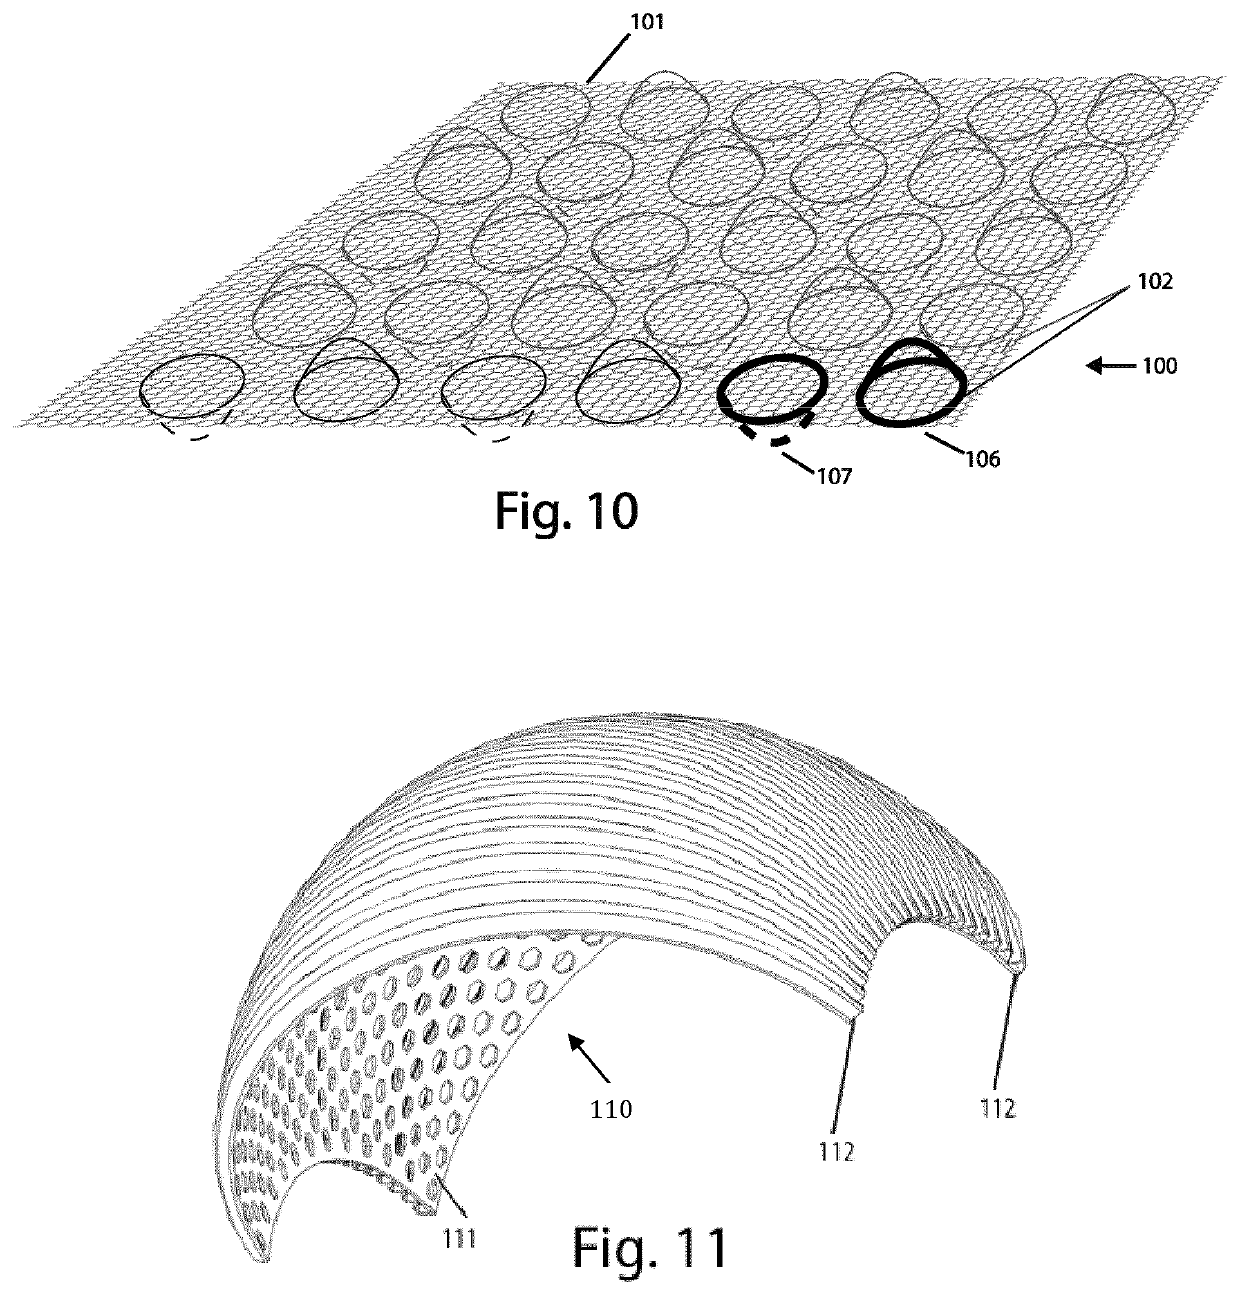 Three-dimensional polymeric medical implants